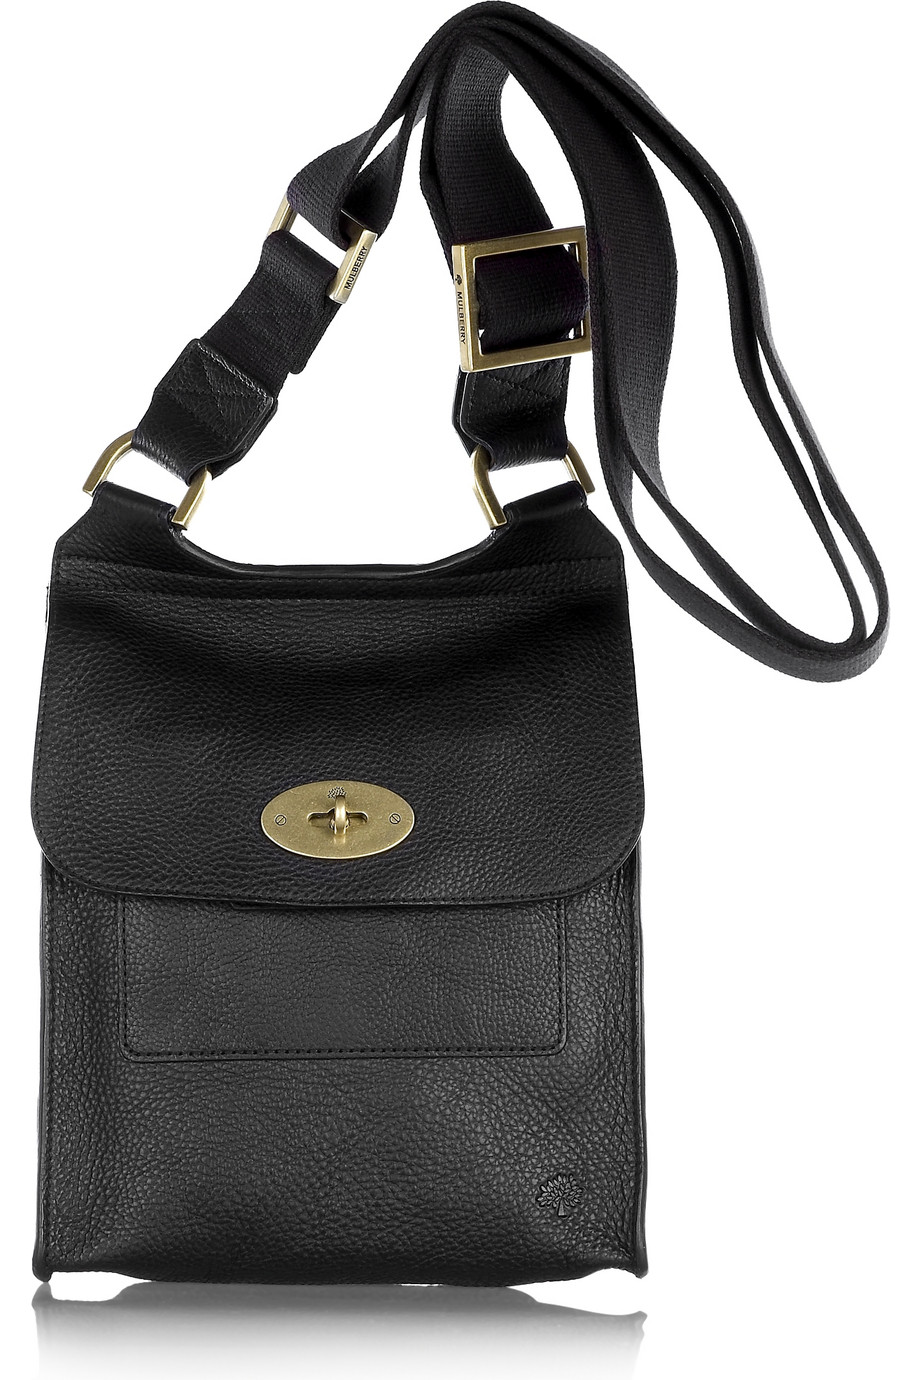 Lyst - Mulberry Antony Leather Crossbody Bag in Black